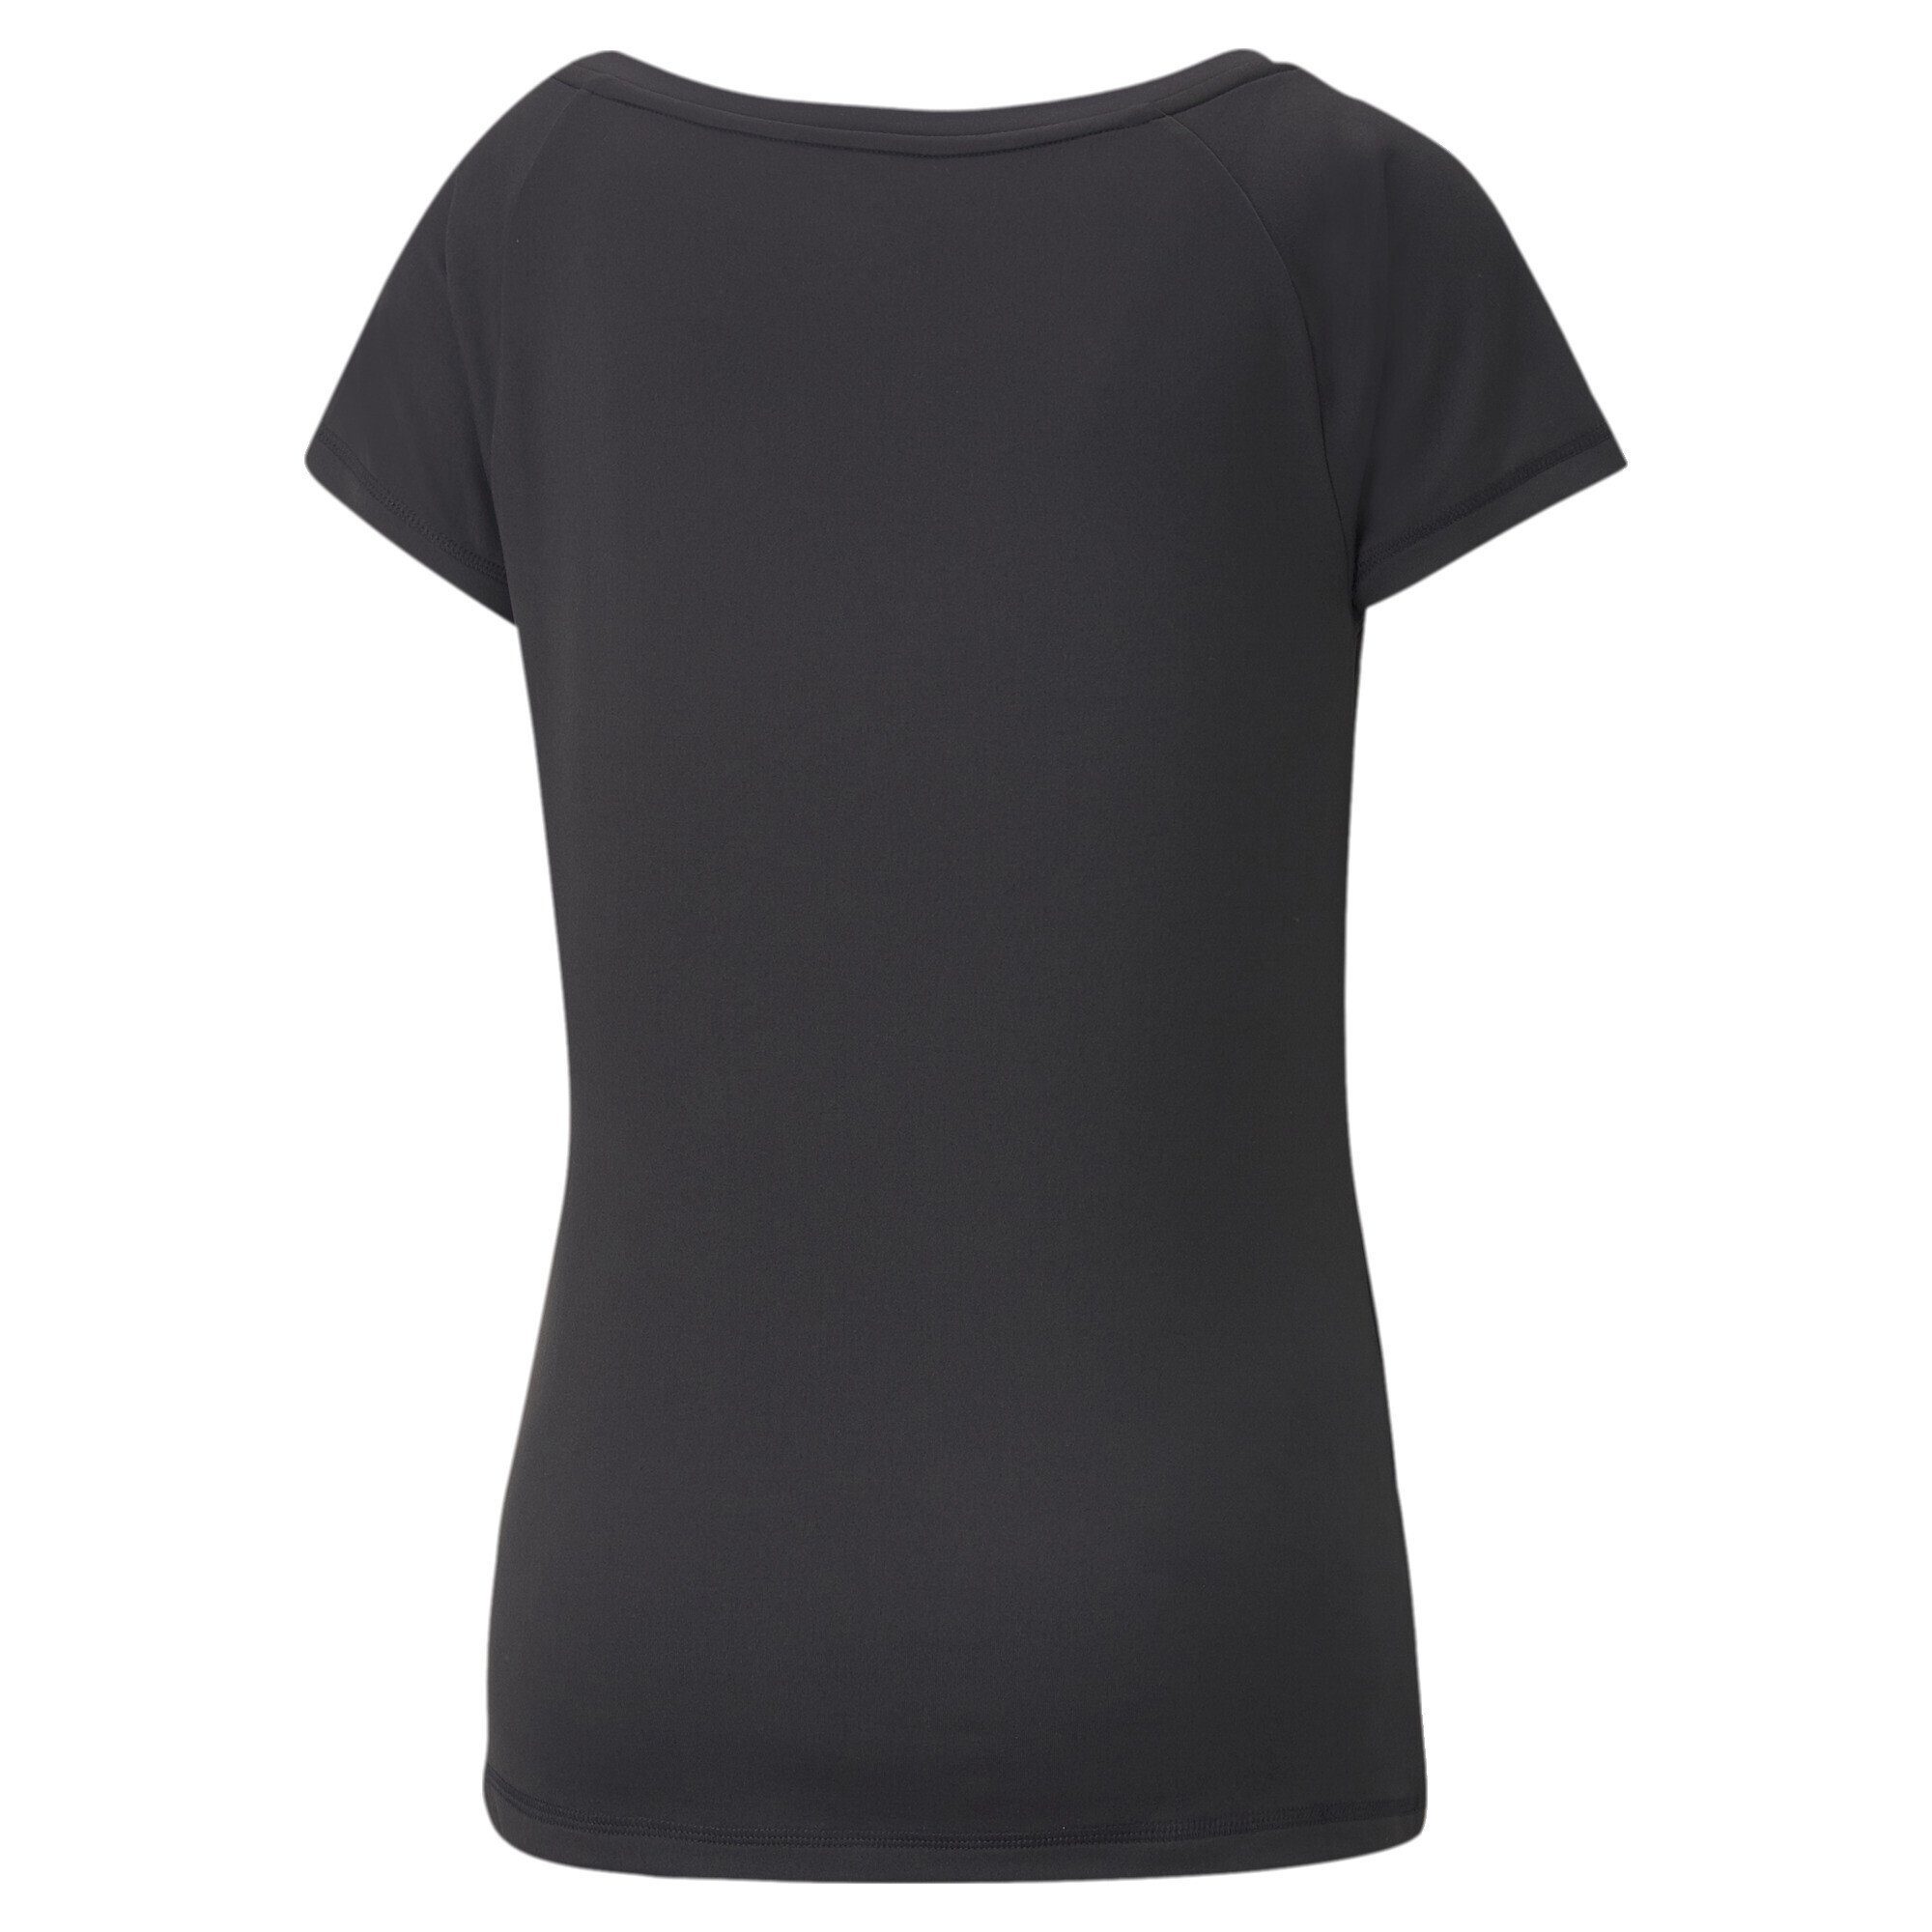 Trainings-T-Shirt Black Favourite PUMA Cat Damen Trainingsshirt Jersey